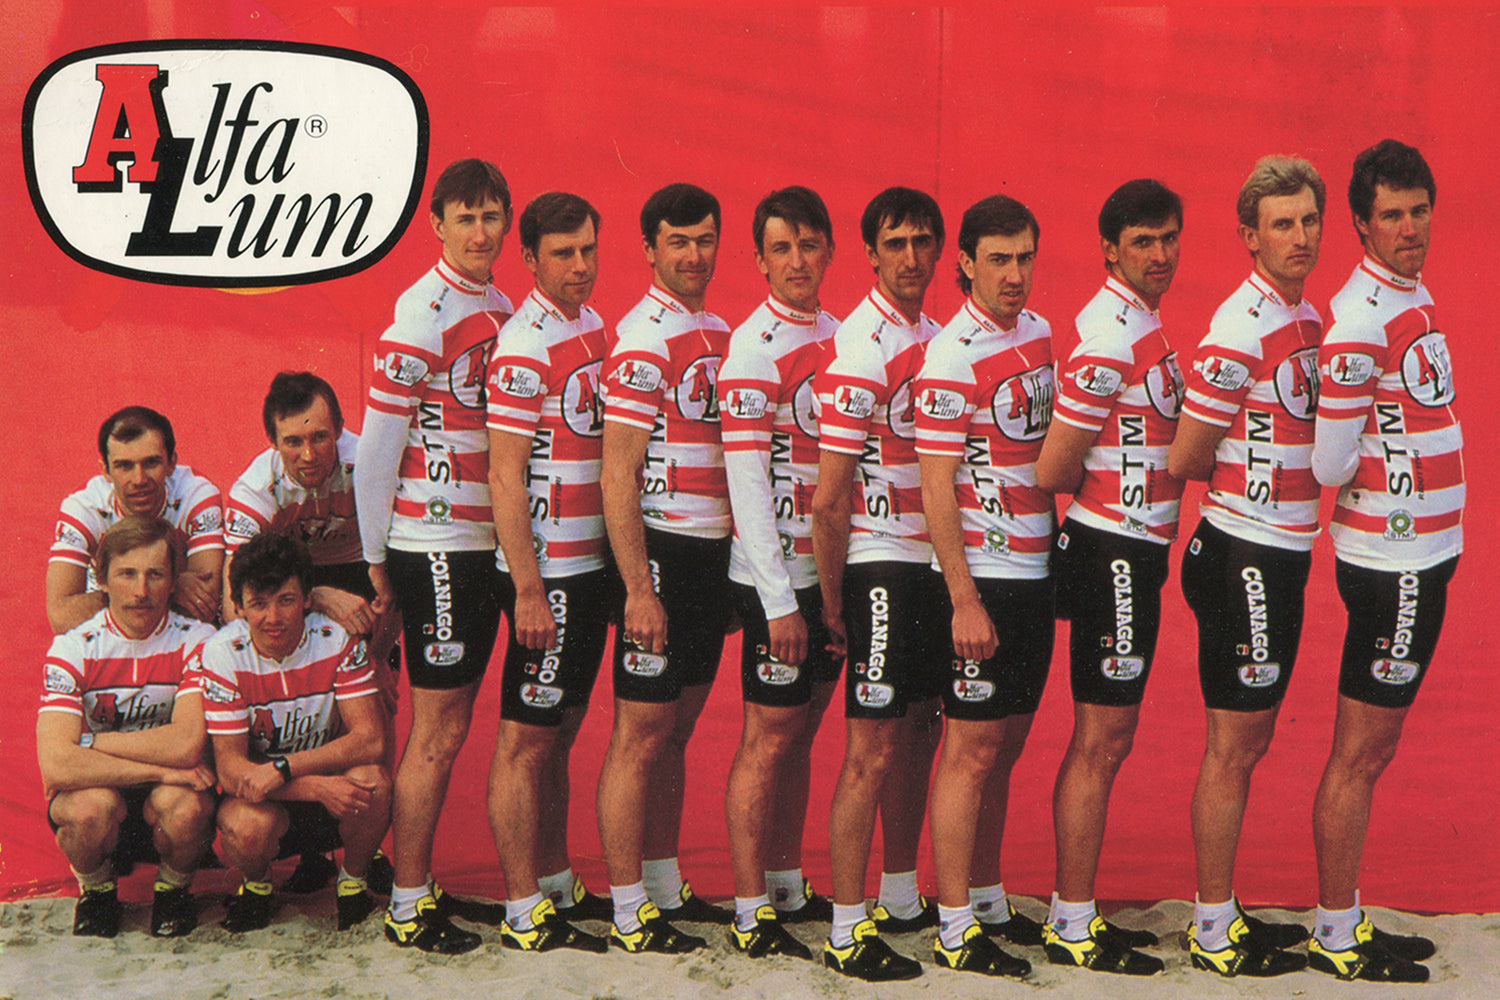 Alfa Lum Cycling Team - Part 3